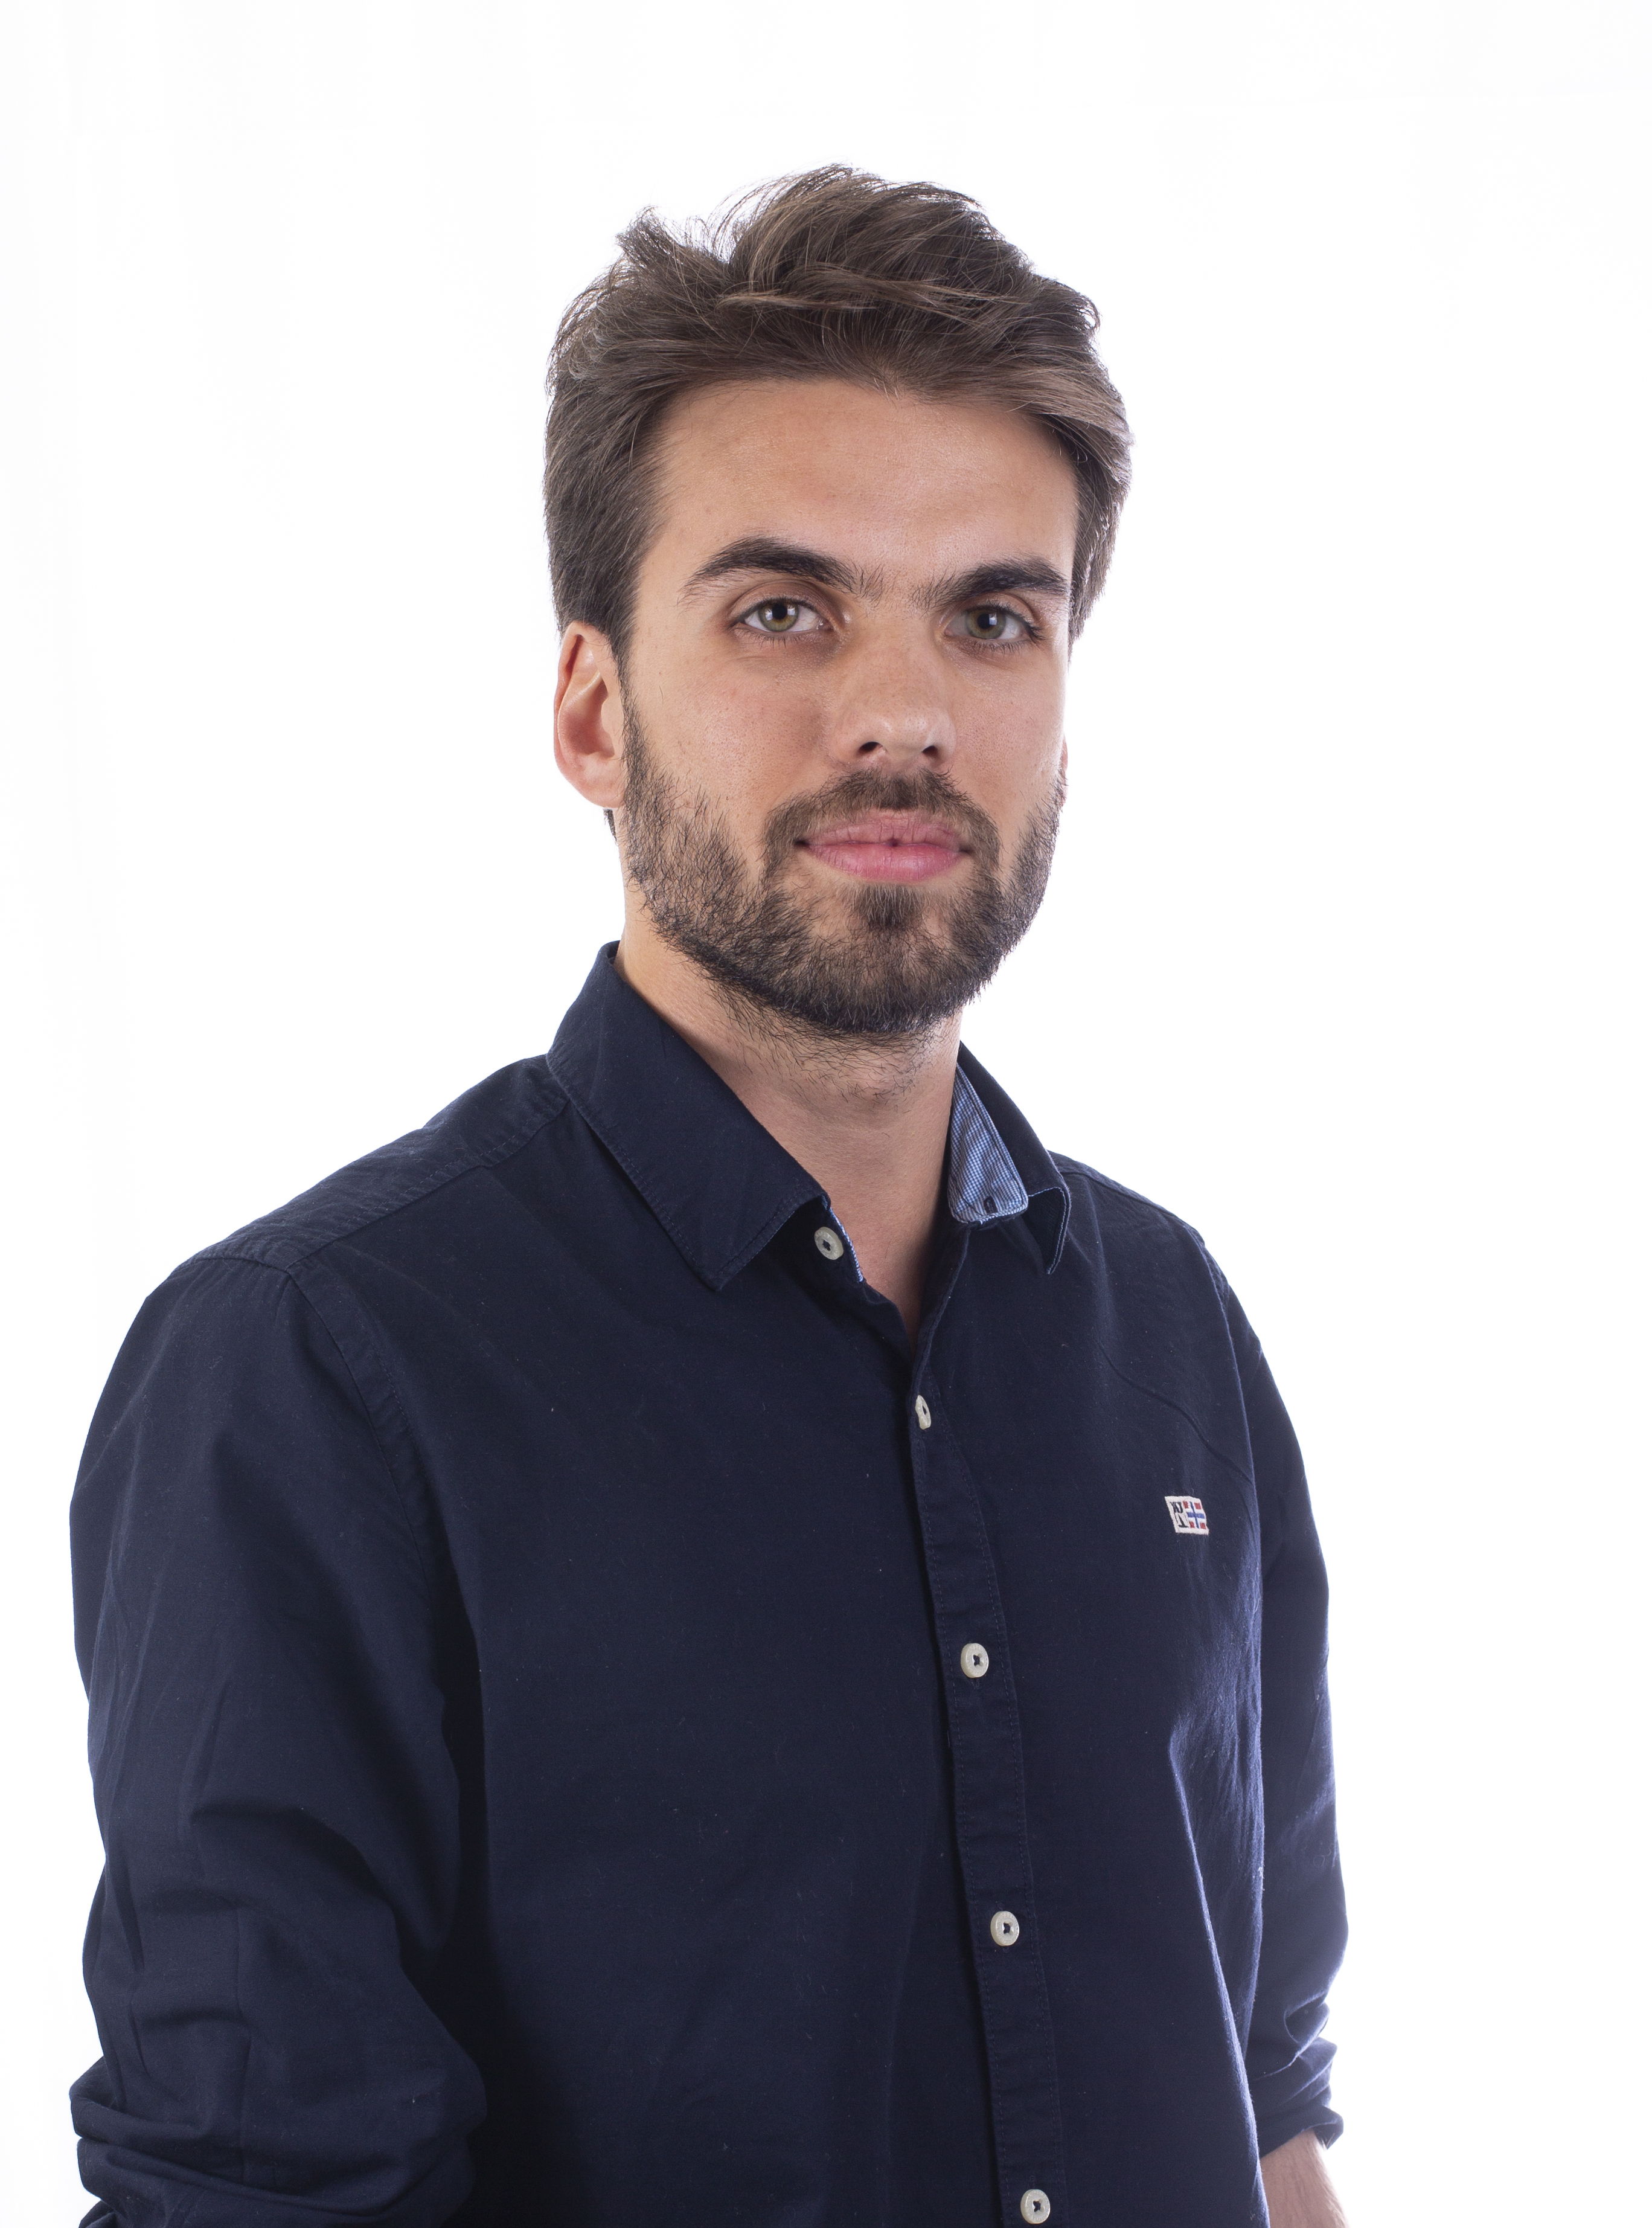 Florian Deleuil, Vice President of Product Management bij Netatmo